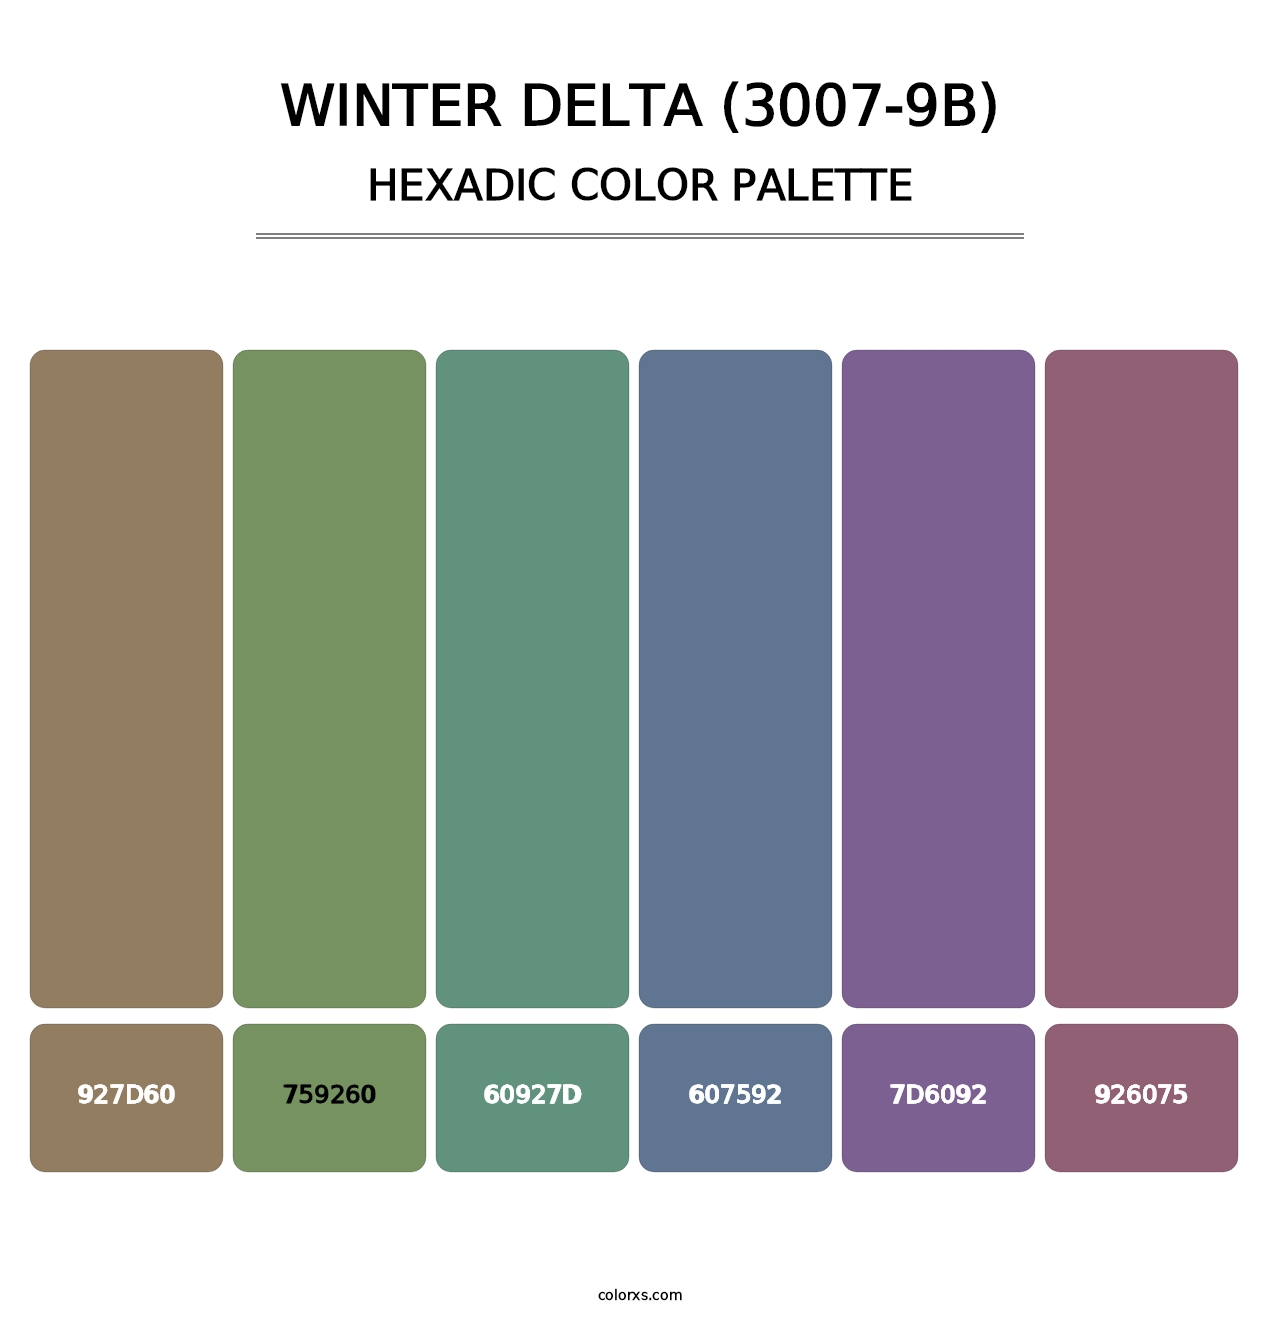 Winter Delta (3007-9B) - Hexadic Color Palette